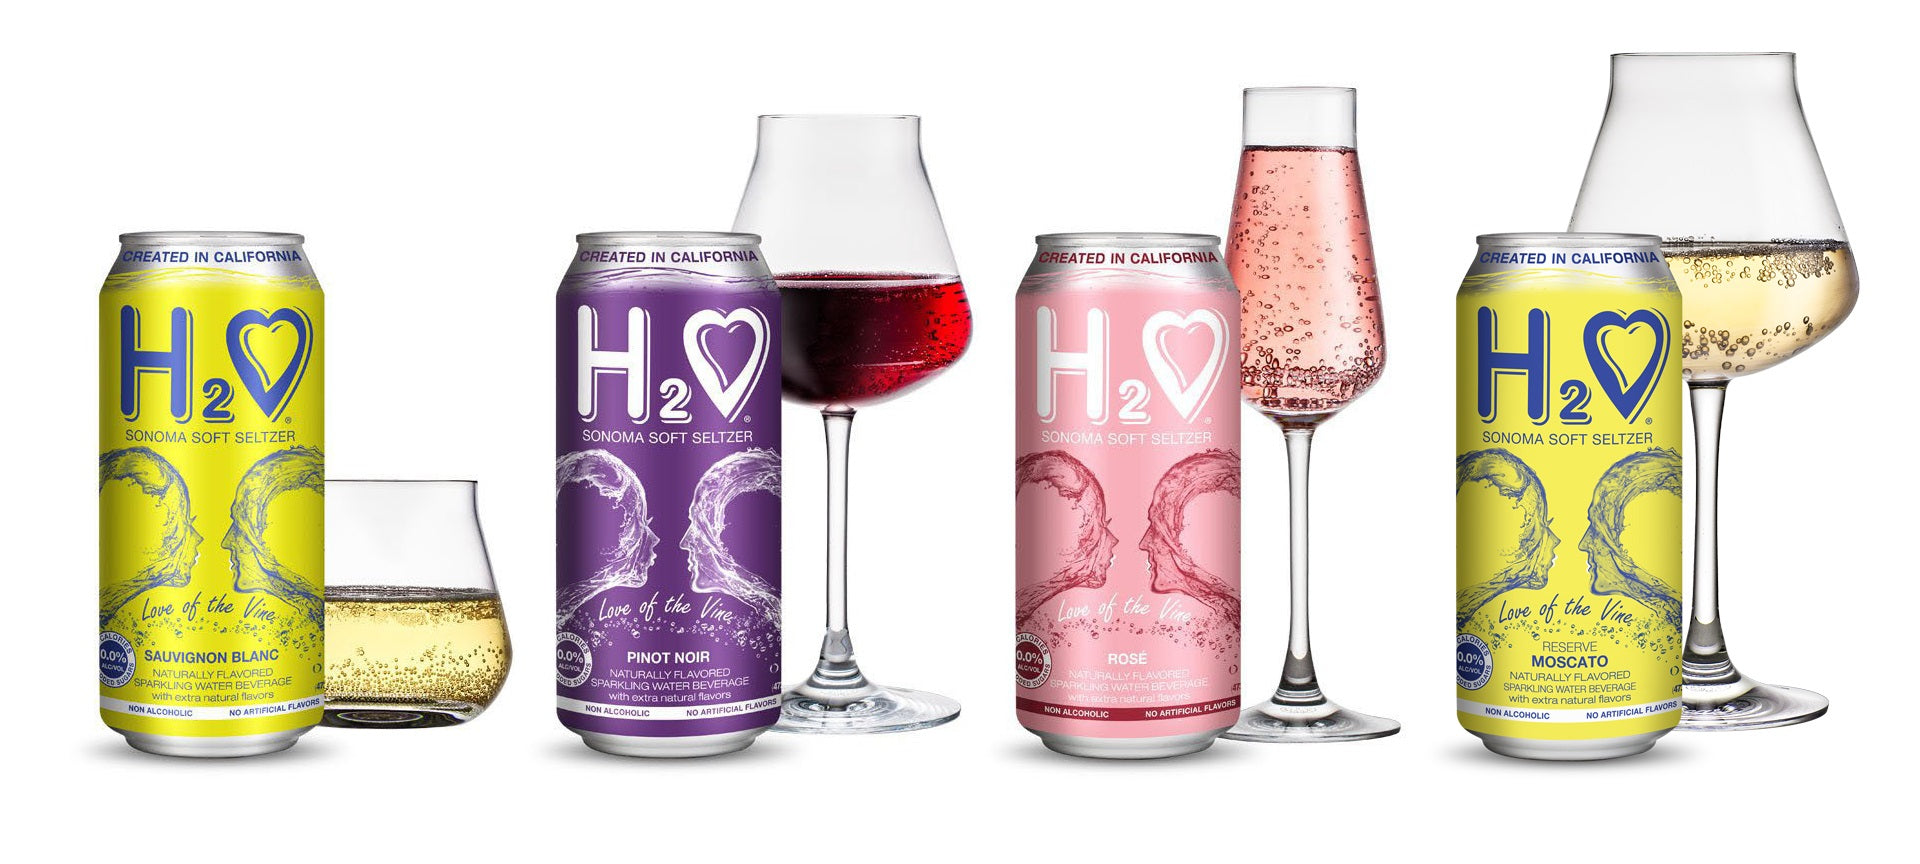 Innovative California Winemaker Creates H2O Sonoma Soft Seltzer, World’s First Wine-Infused, Alcohol-Free Soft Seltzer